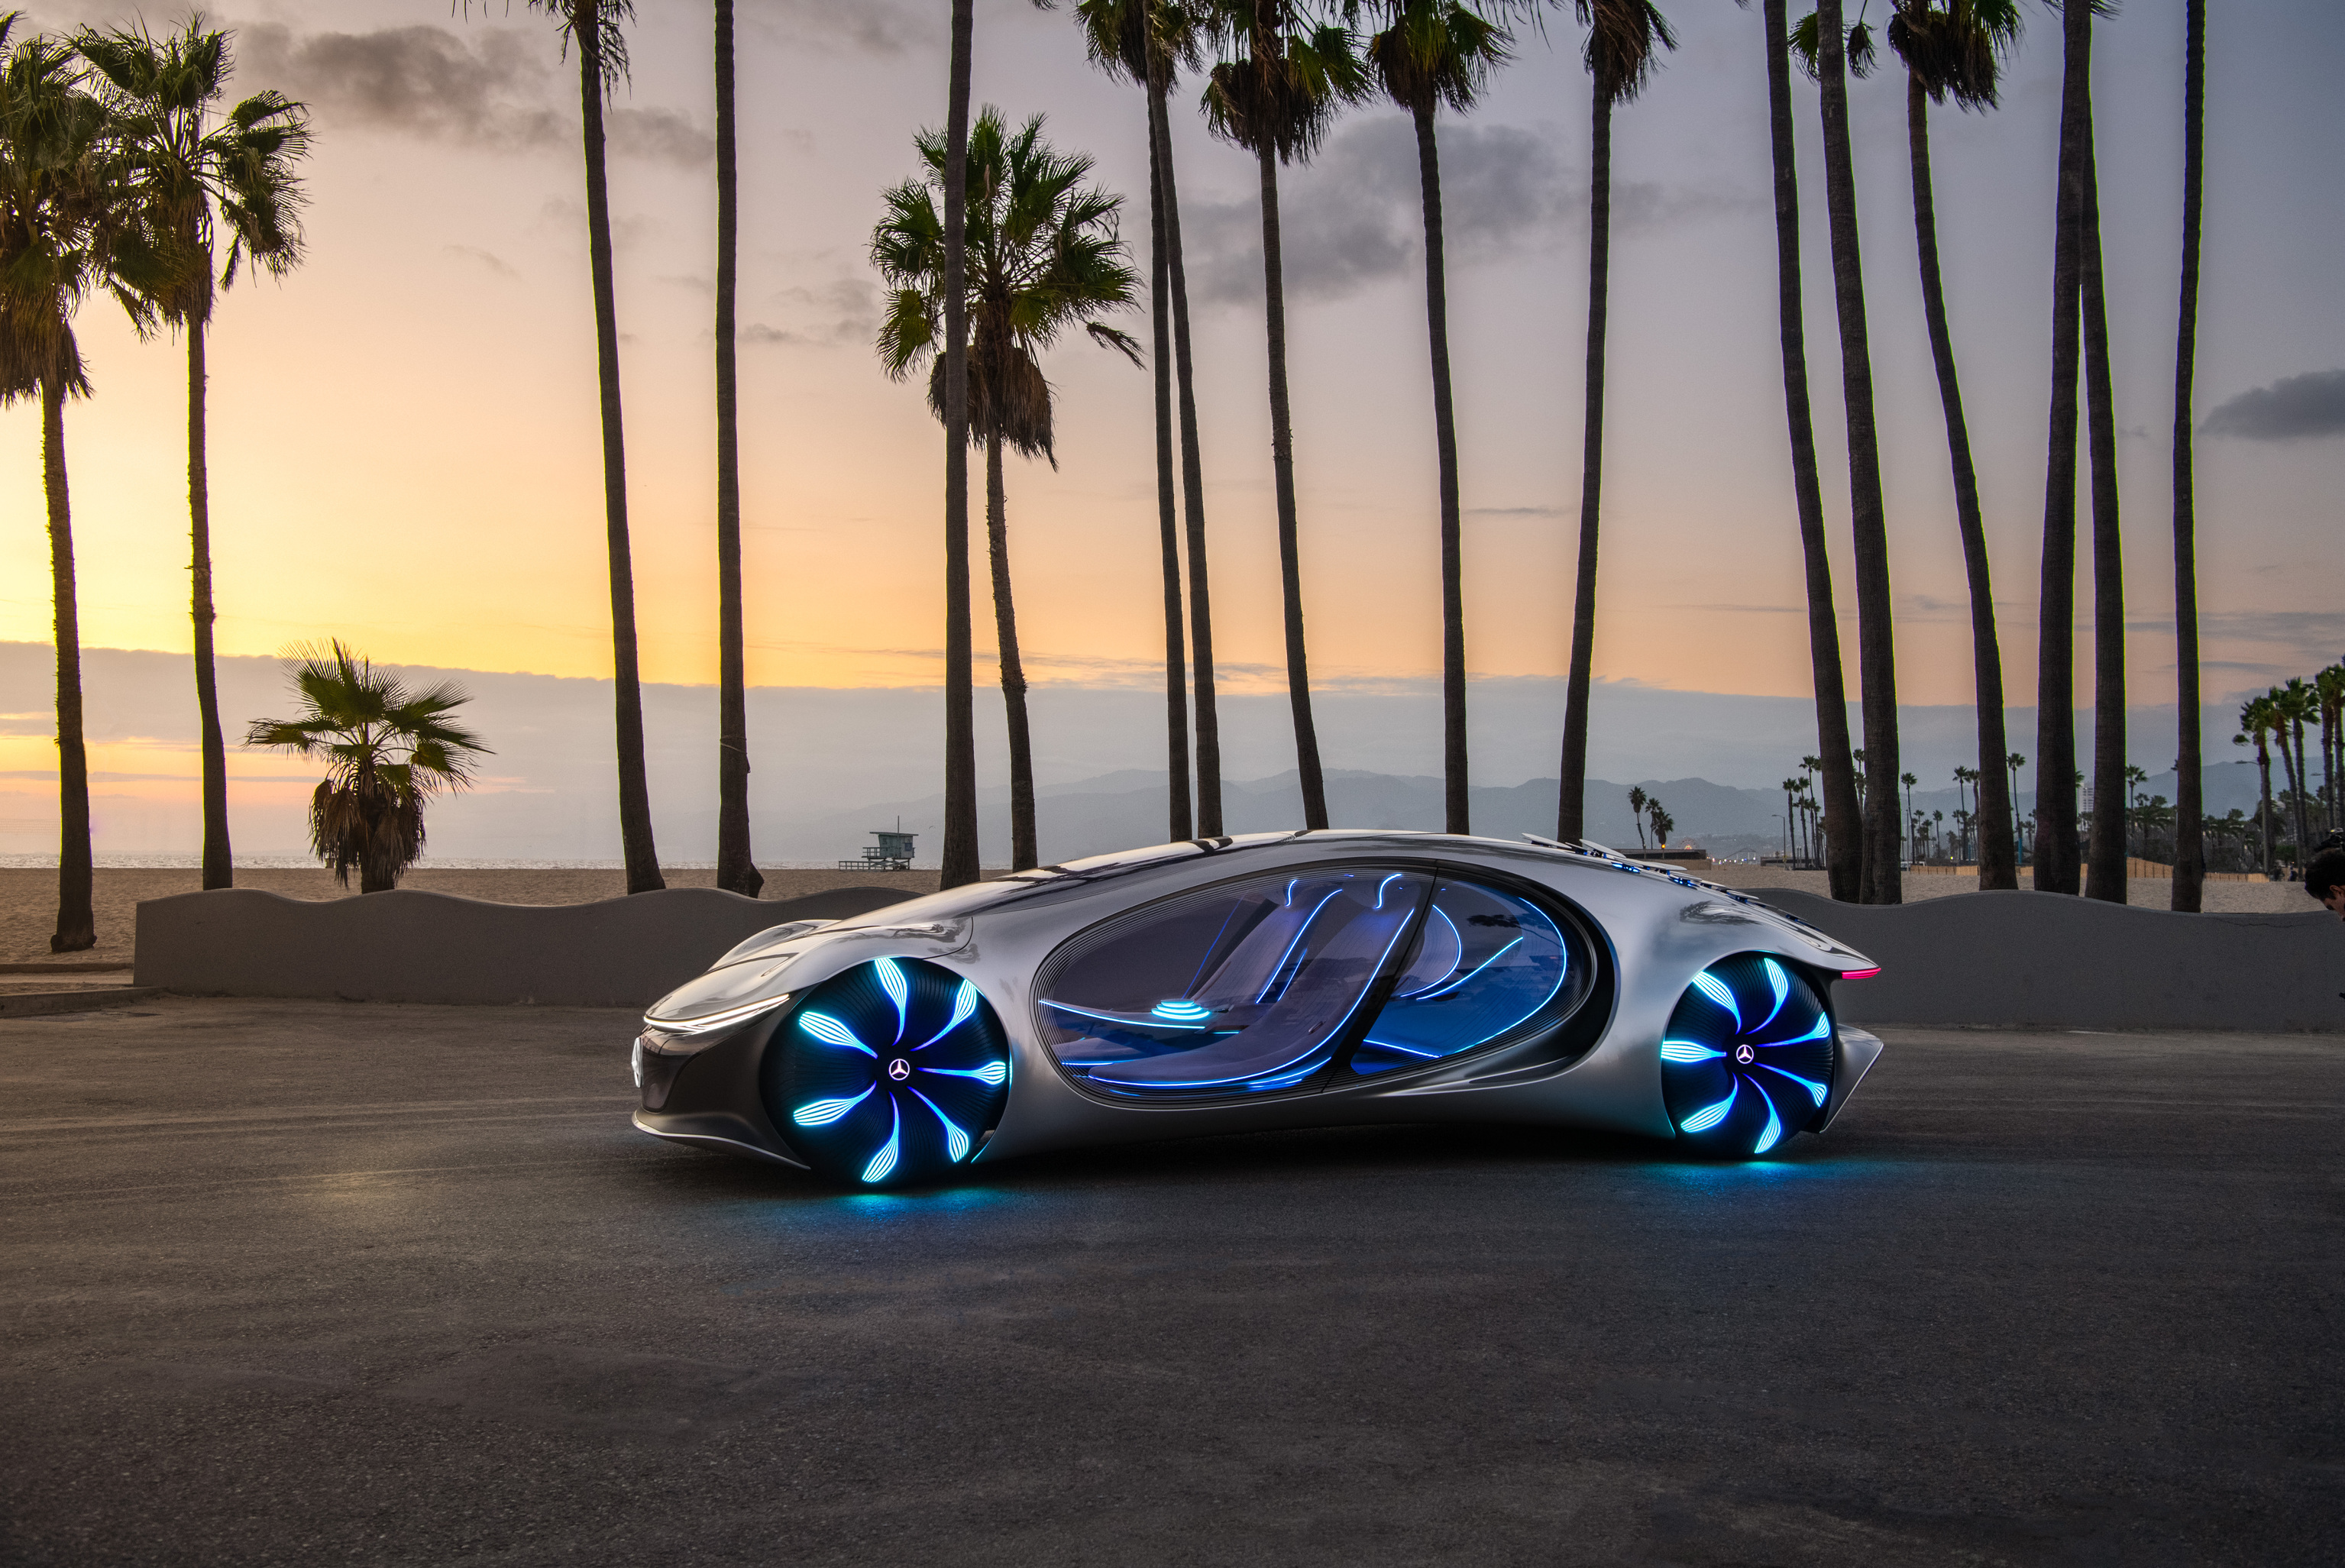 THE SUPERB CONCEPT CARS FROM FUTURE 創建發想 ╳ 預覽未來 以夢想雕琢的概念車